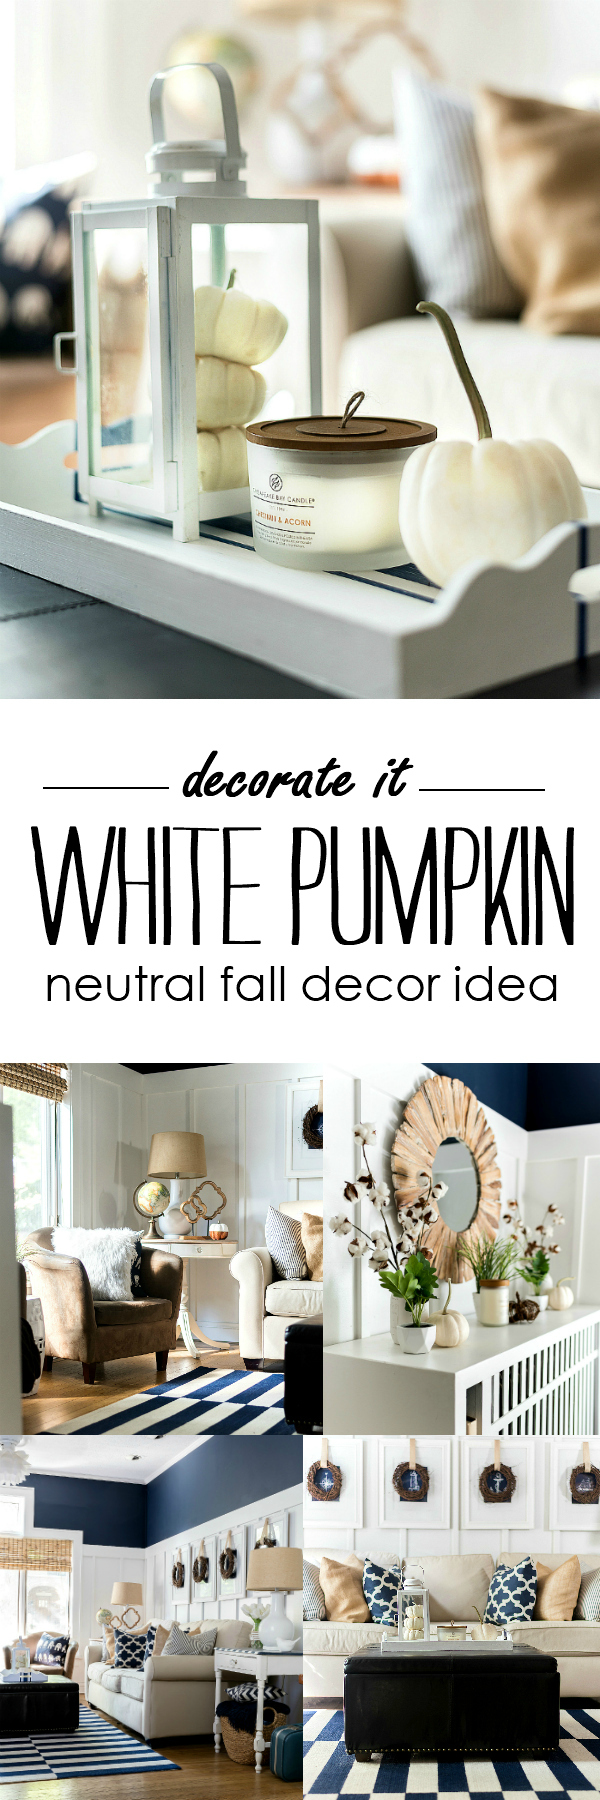 Fall Decor White Pumpkins - Fall Decor Neutral - Navy & White Fall Decor - Board and Batten Living Room Fall Decor